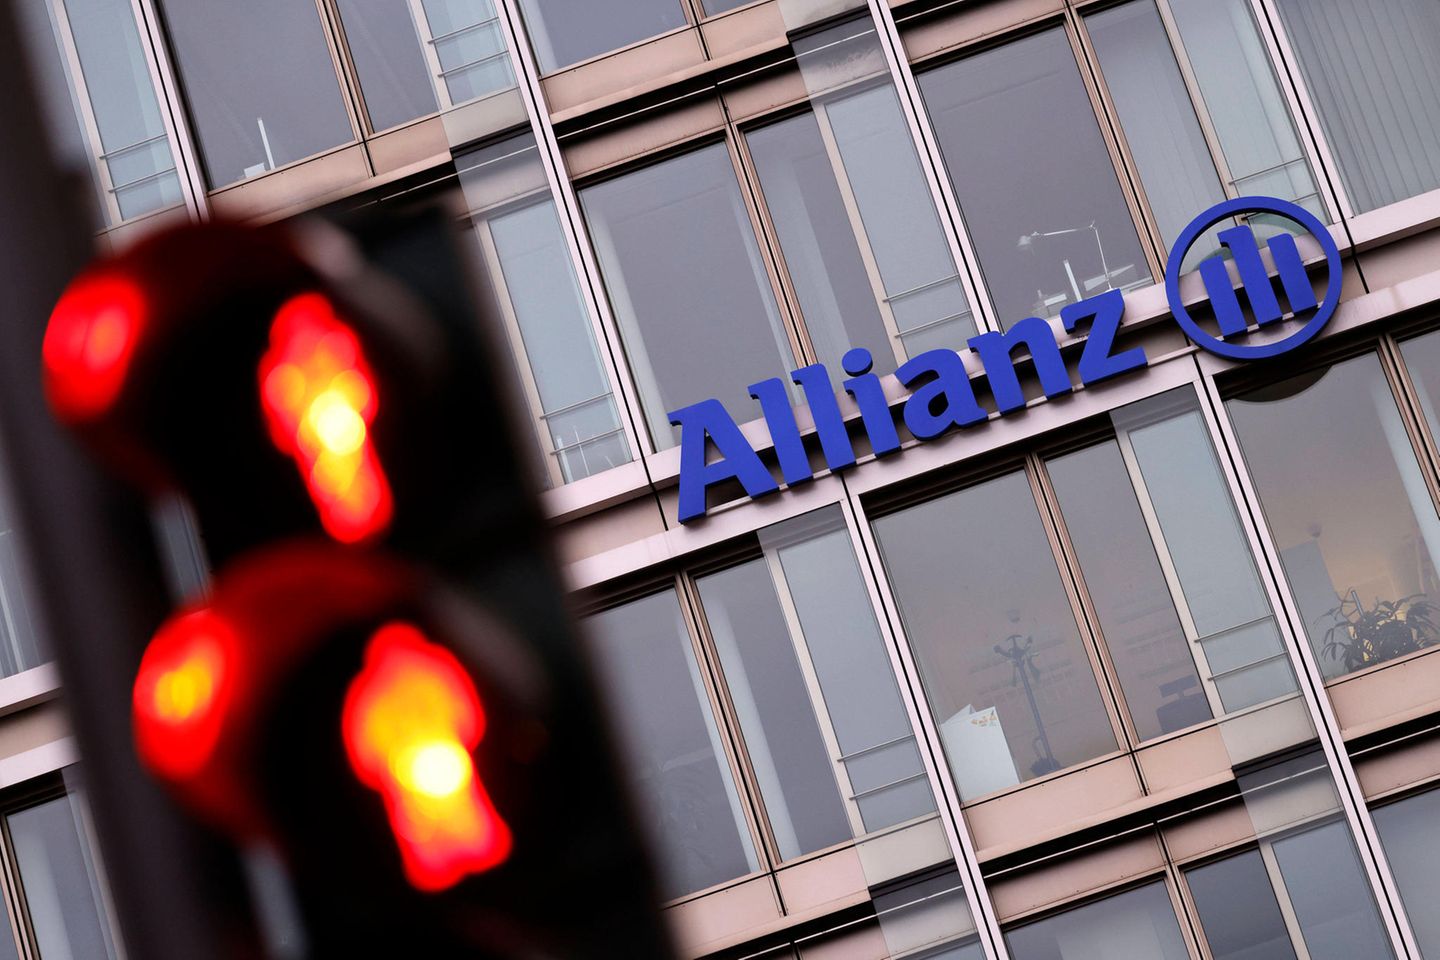 Life insurance has long been a lucrative business for insurers like Allianz